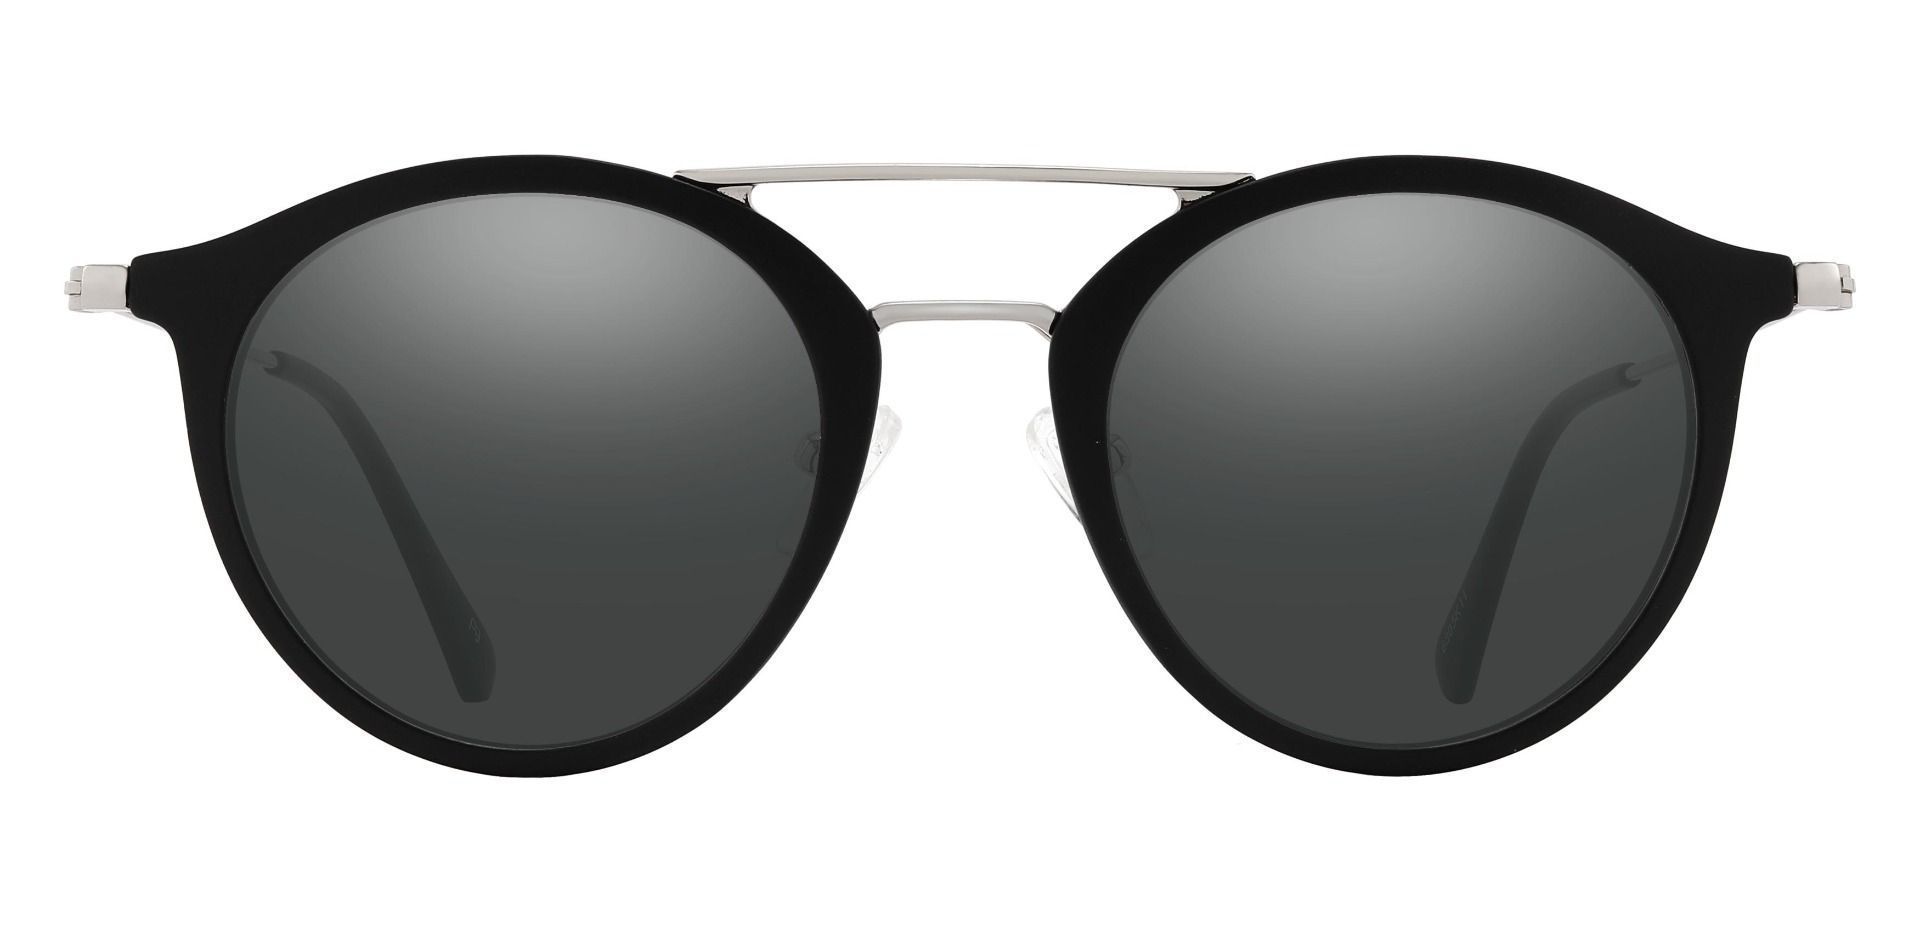 Malden Aviator Prescription Sunglasses - Black Frame With Gray Lenses